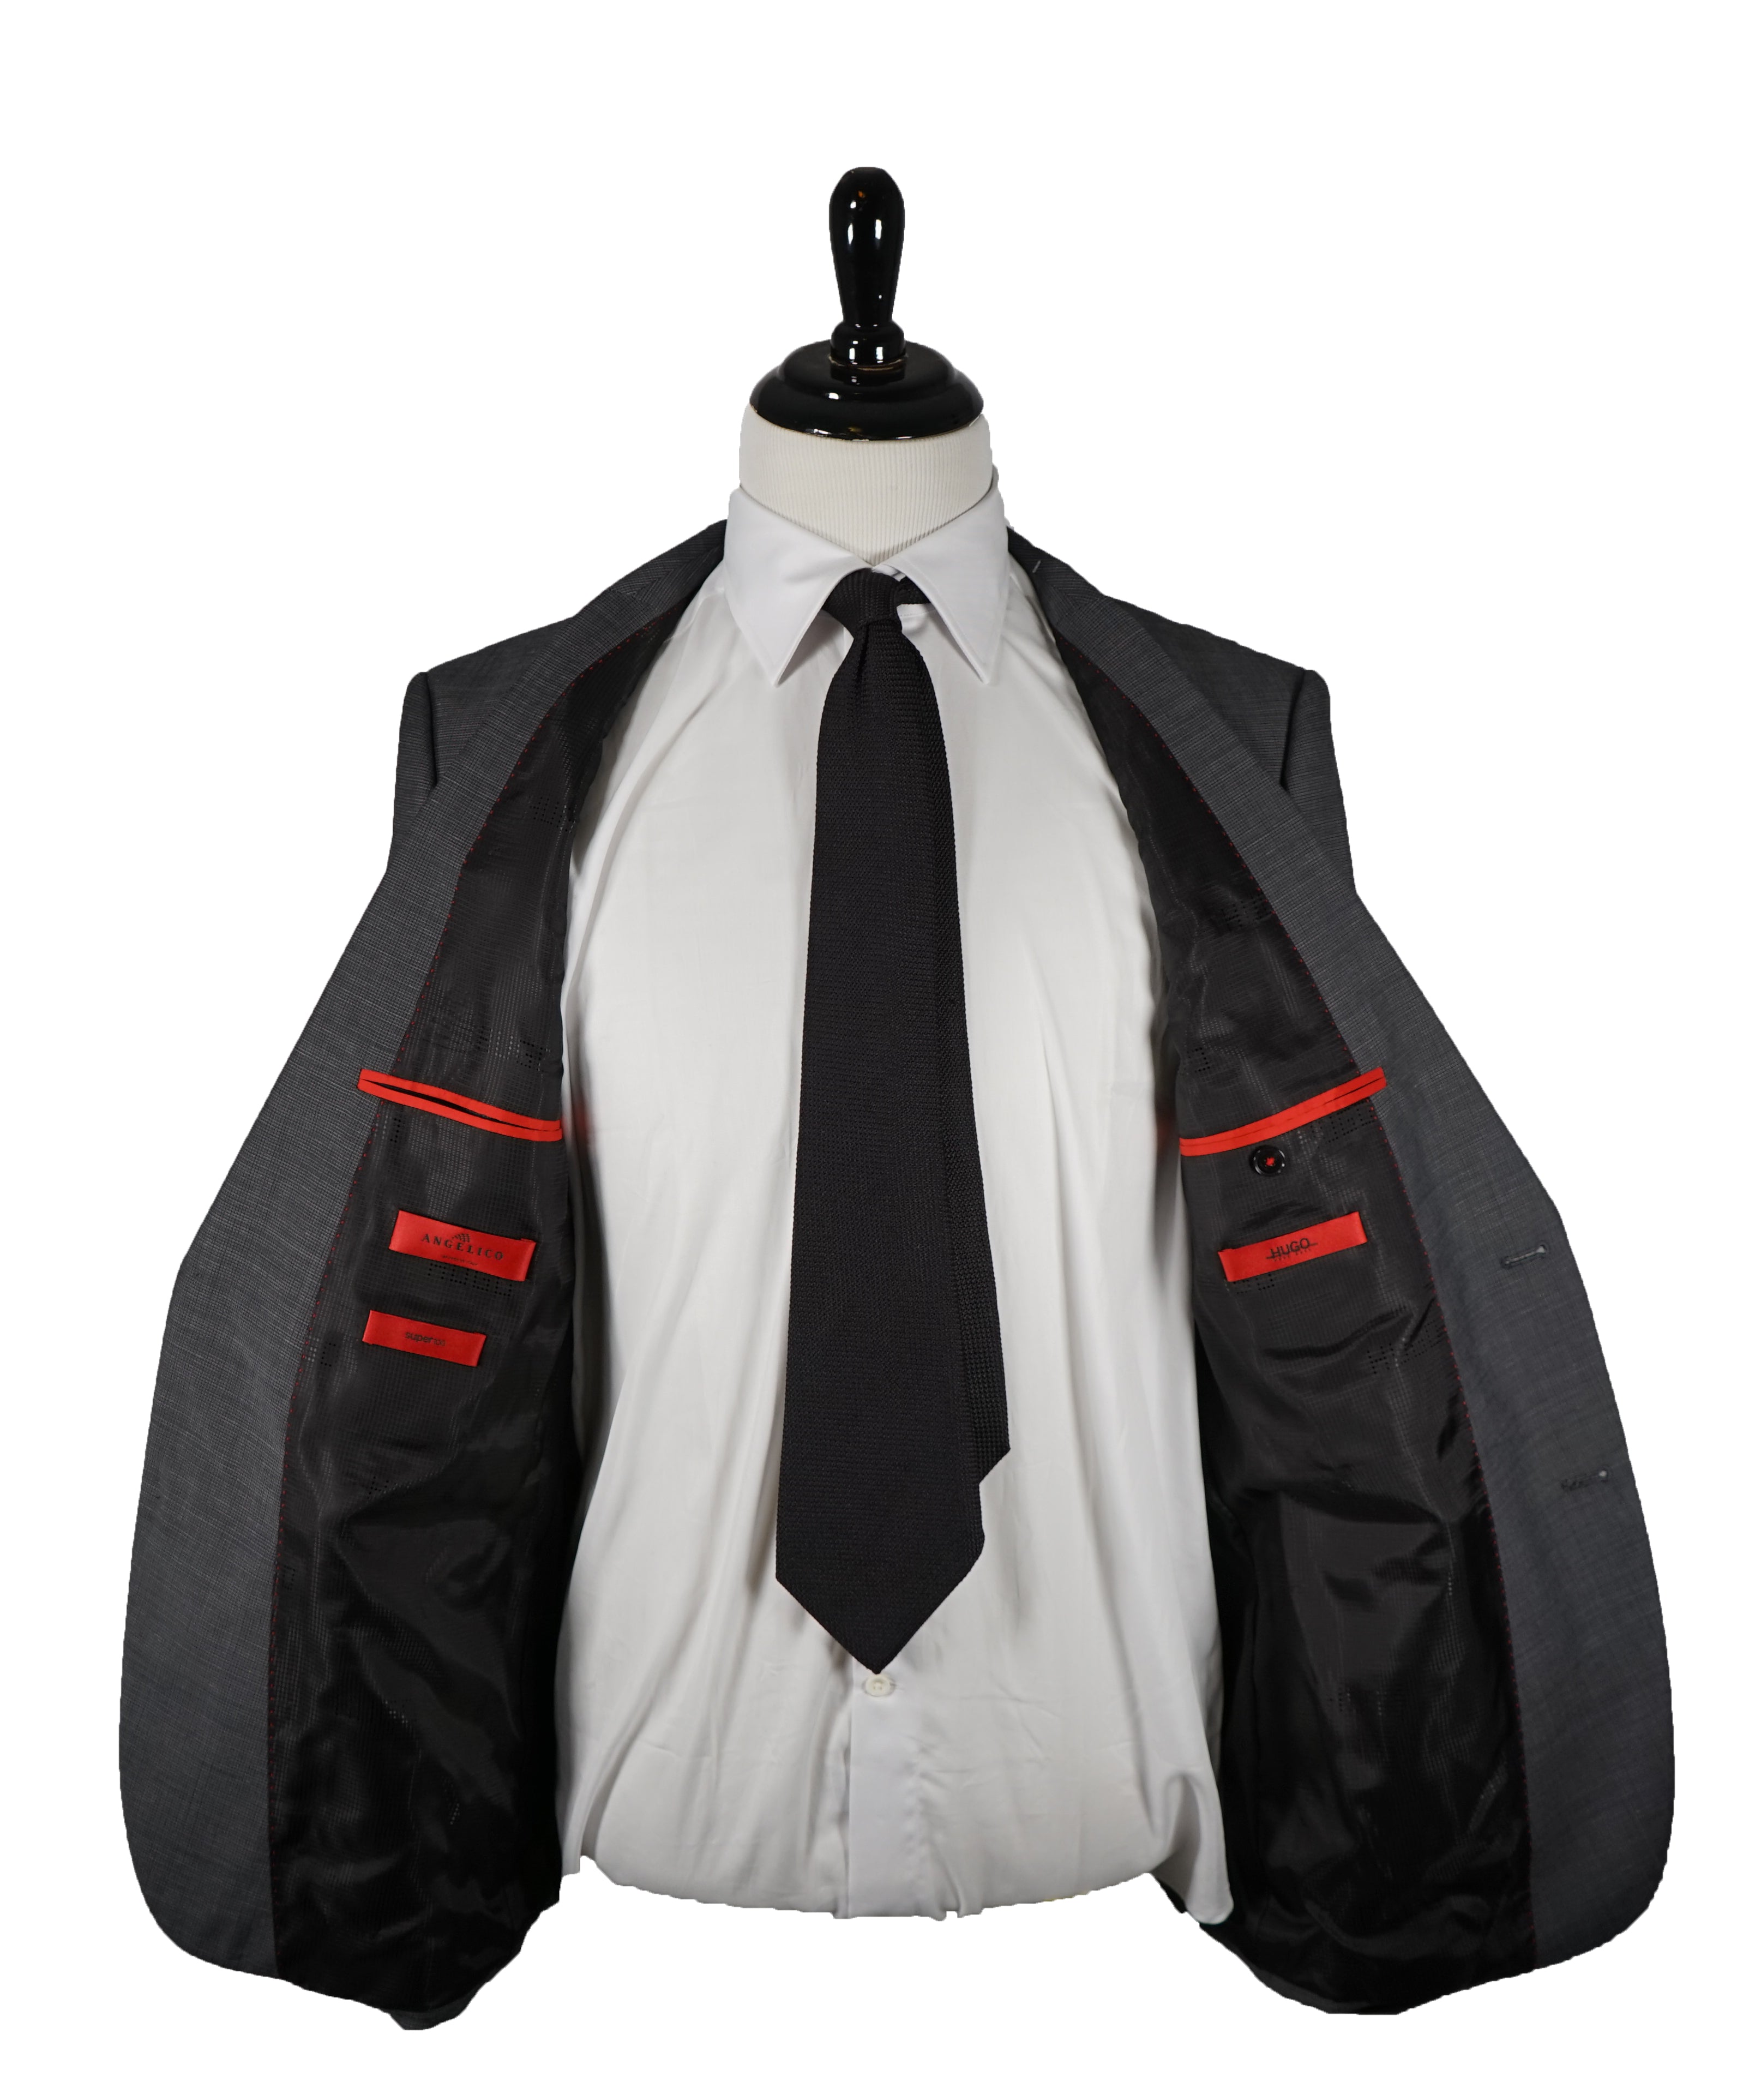 hugo boss peak lapel suit